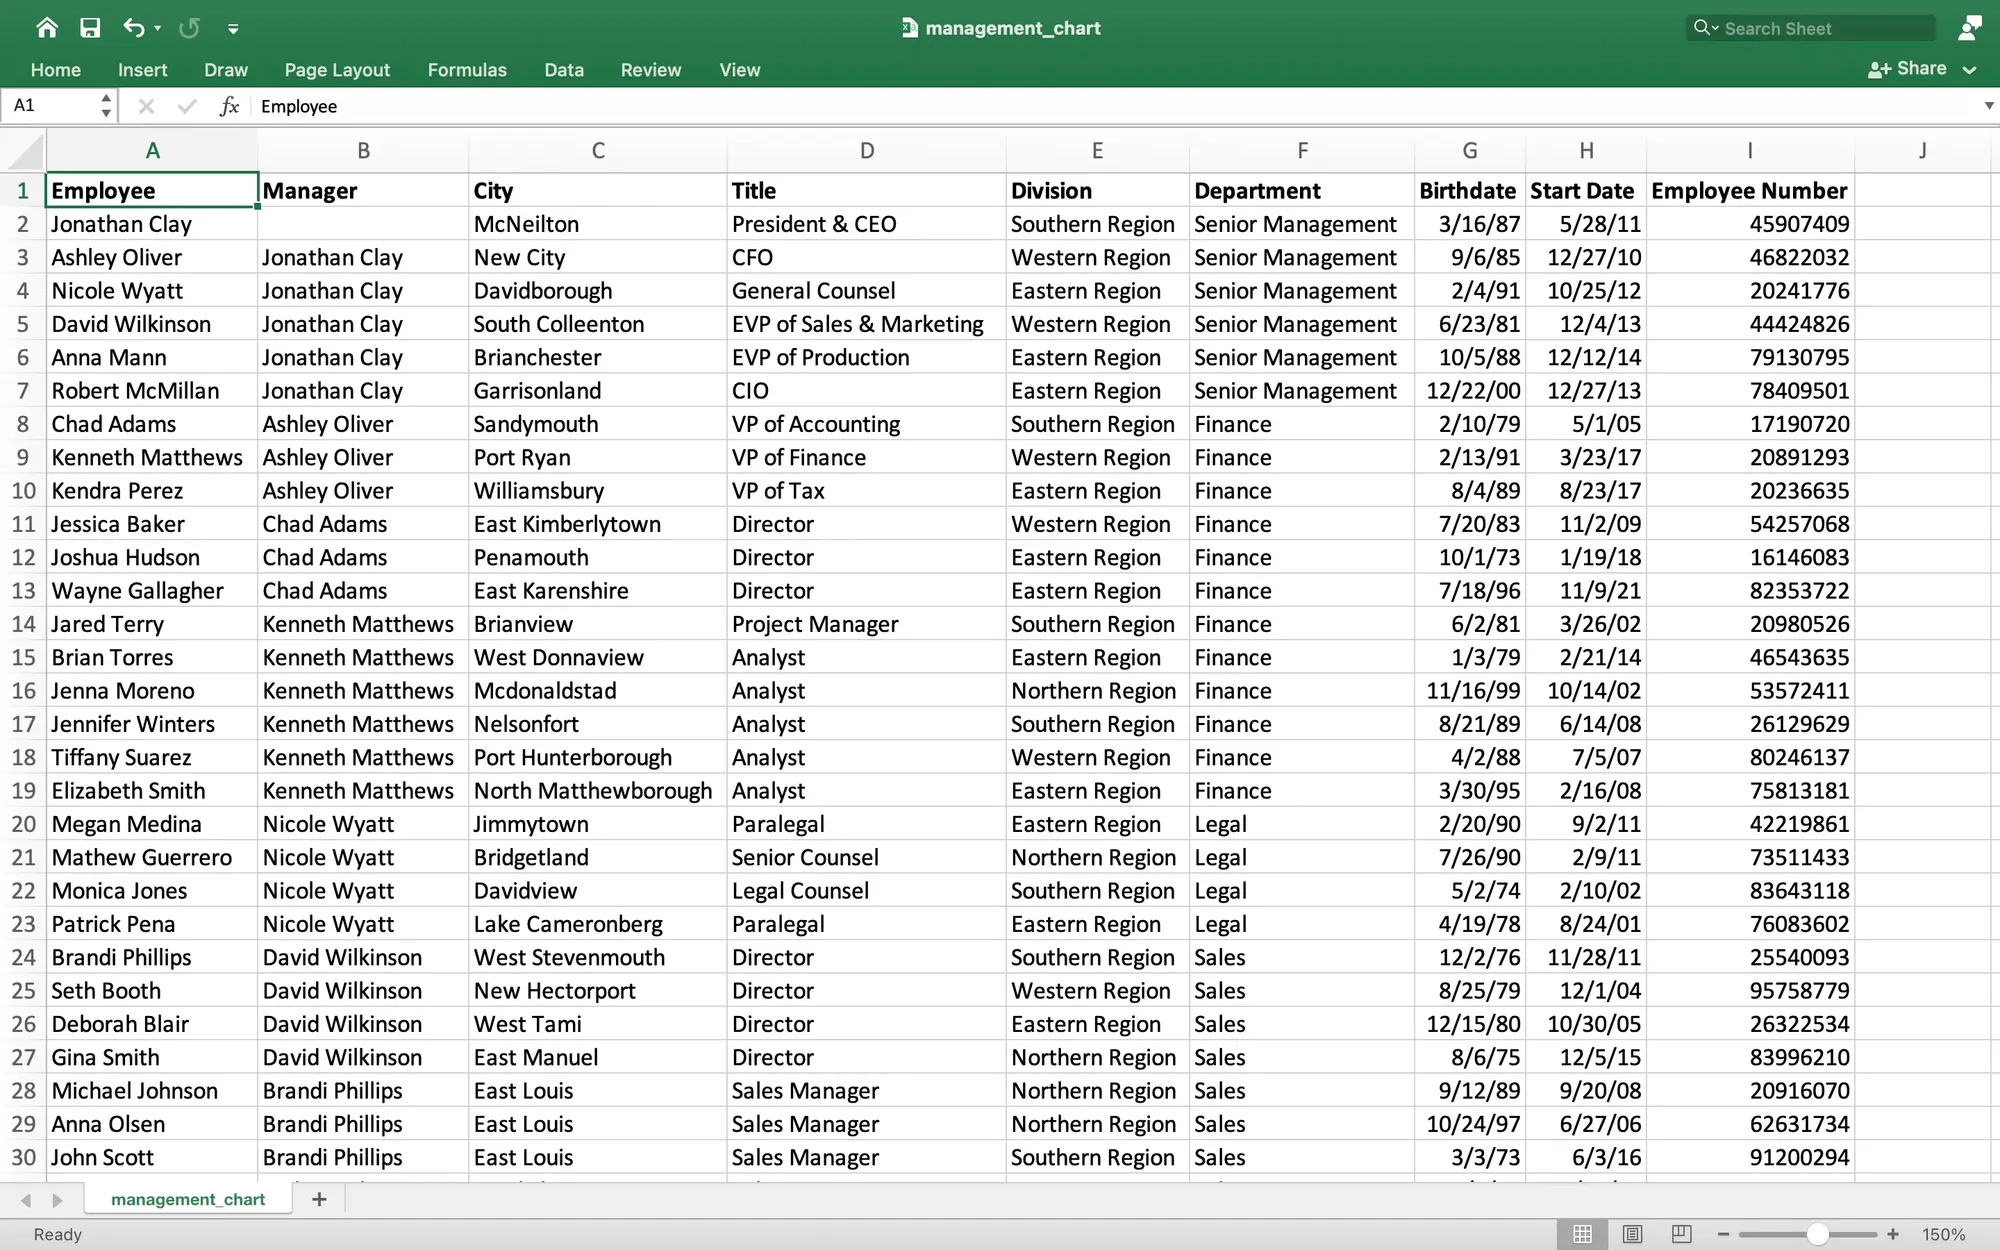 Sample employee list in Microsoft Excel